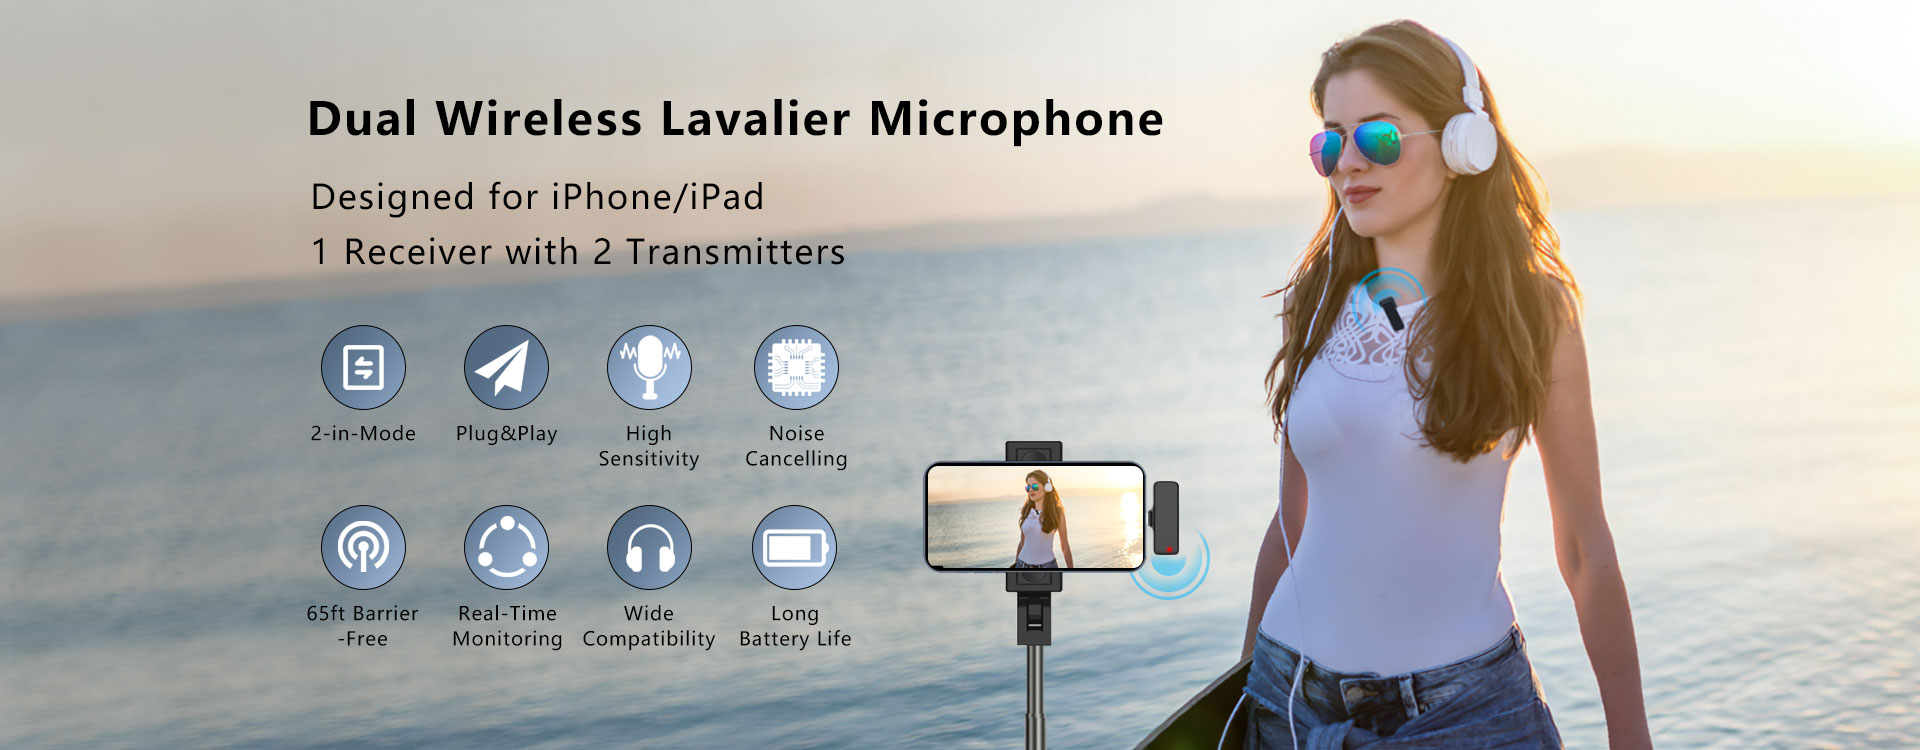 M6 Wireless Lavalier Microphone